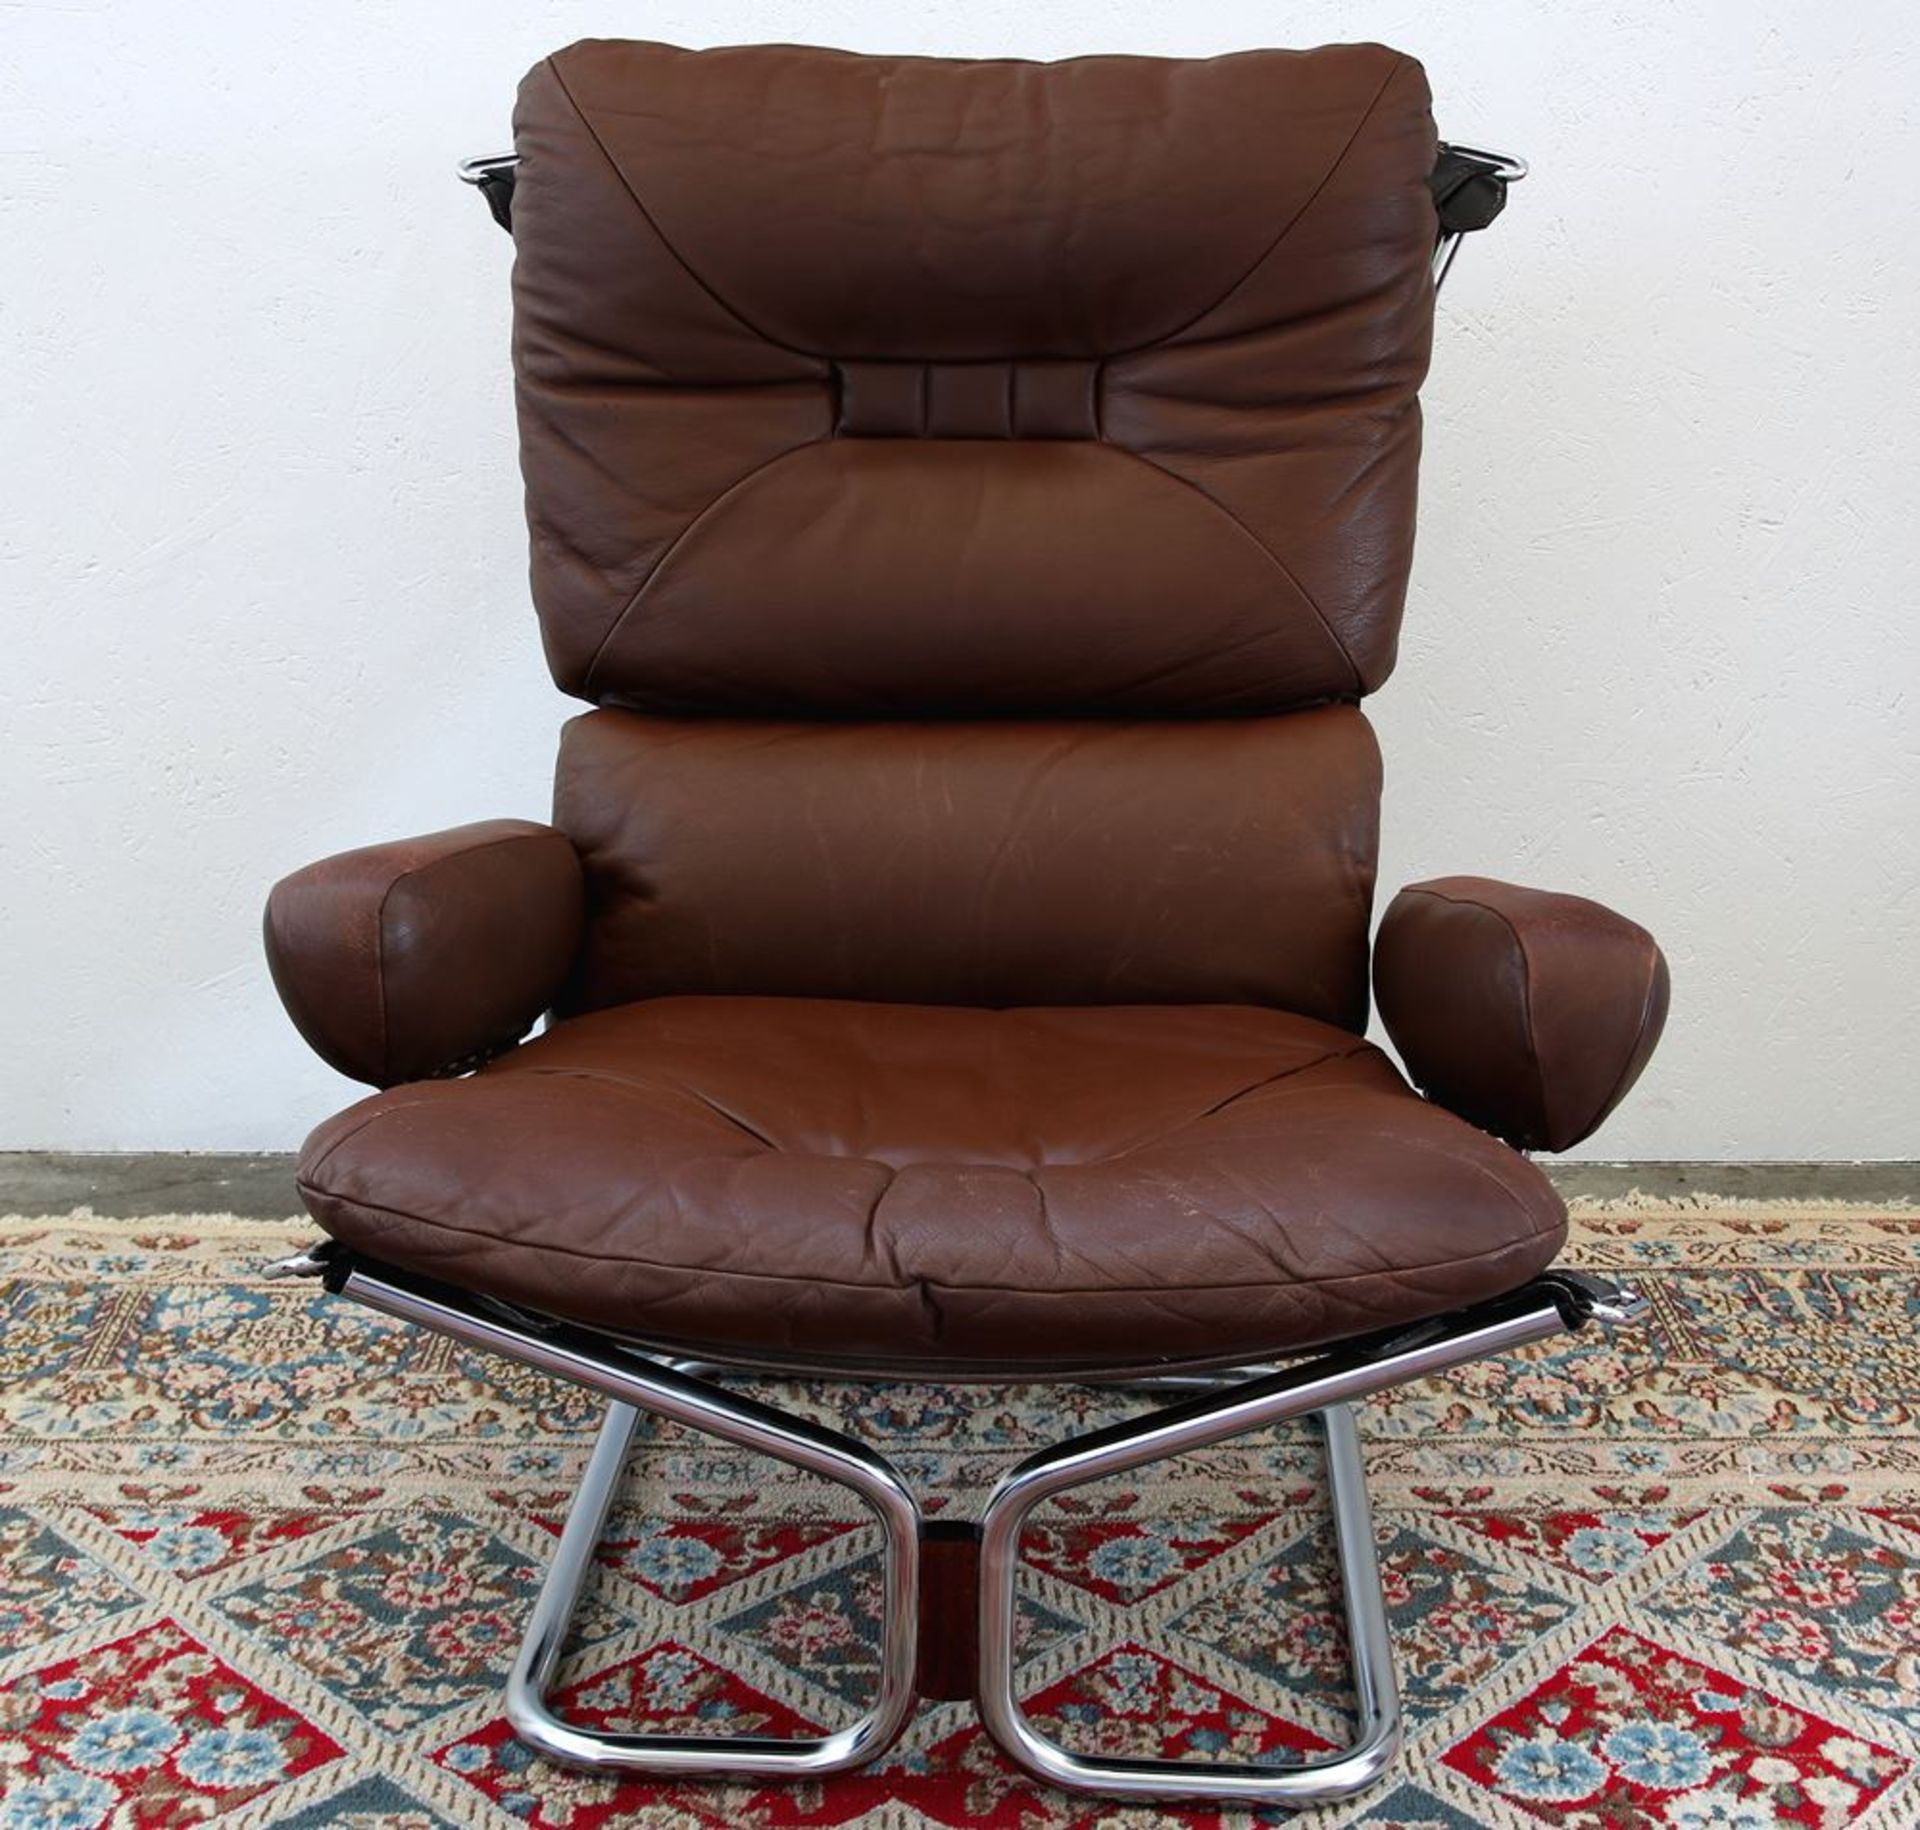 Designer Sessel1970-er Jahre. Chromgestell und braunes Leder. Größe ca. 78 x 73 cm, Höhe ca. 106 cm,